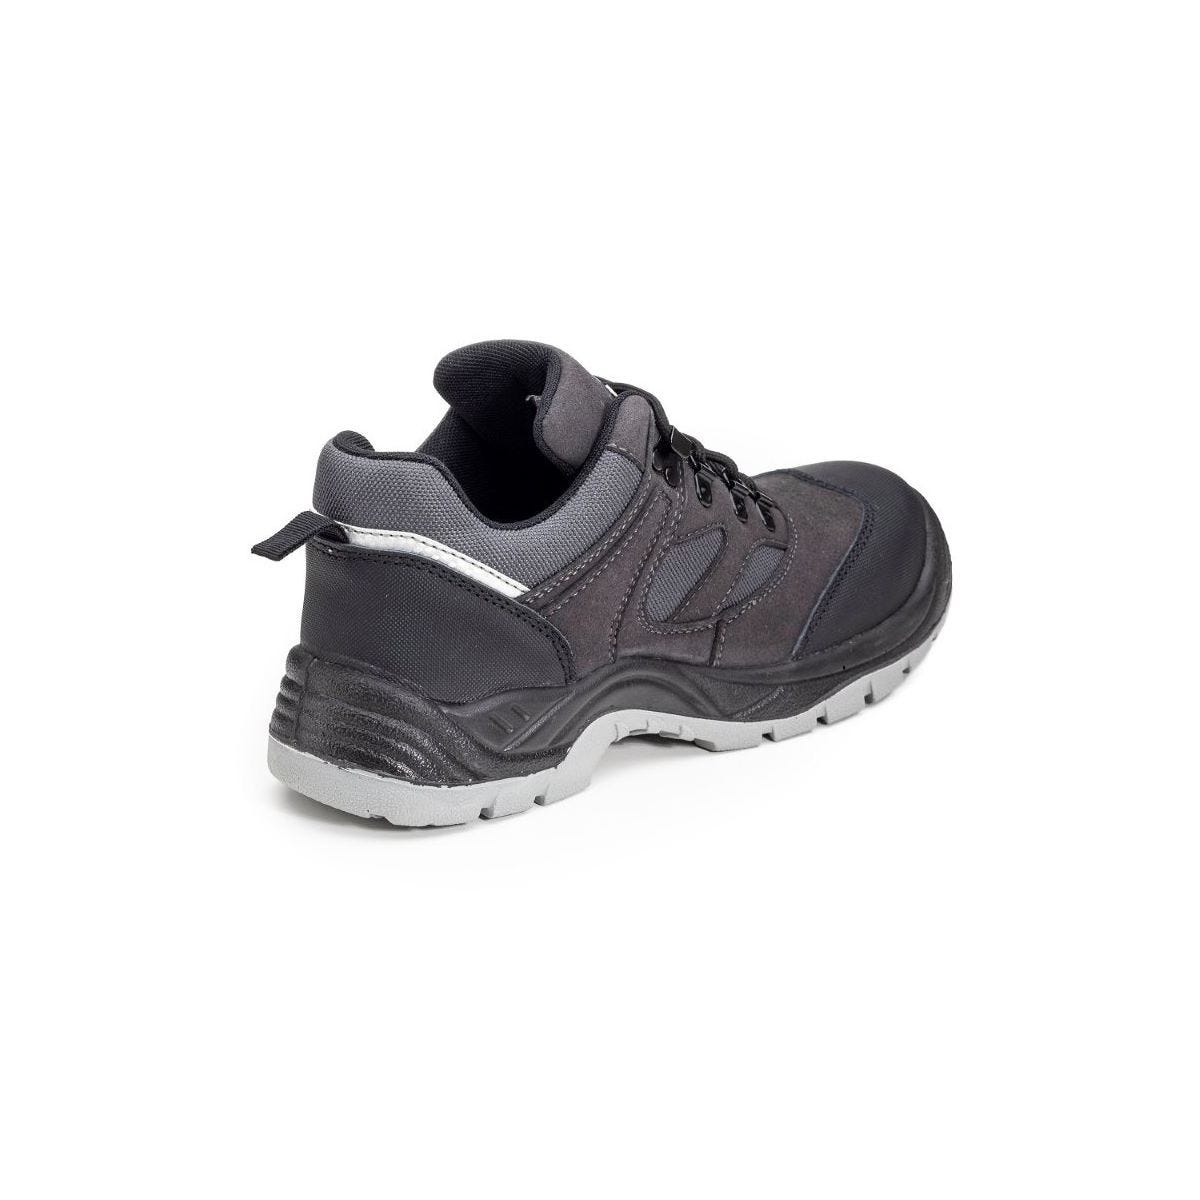 Chaussures sécurité SILVER Basse Anthracite - Coverguard - Taille 42 2